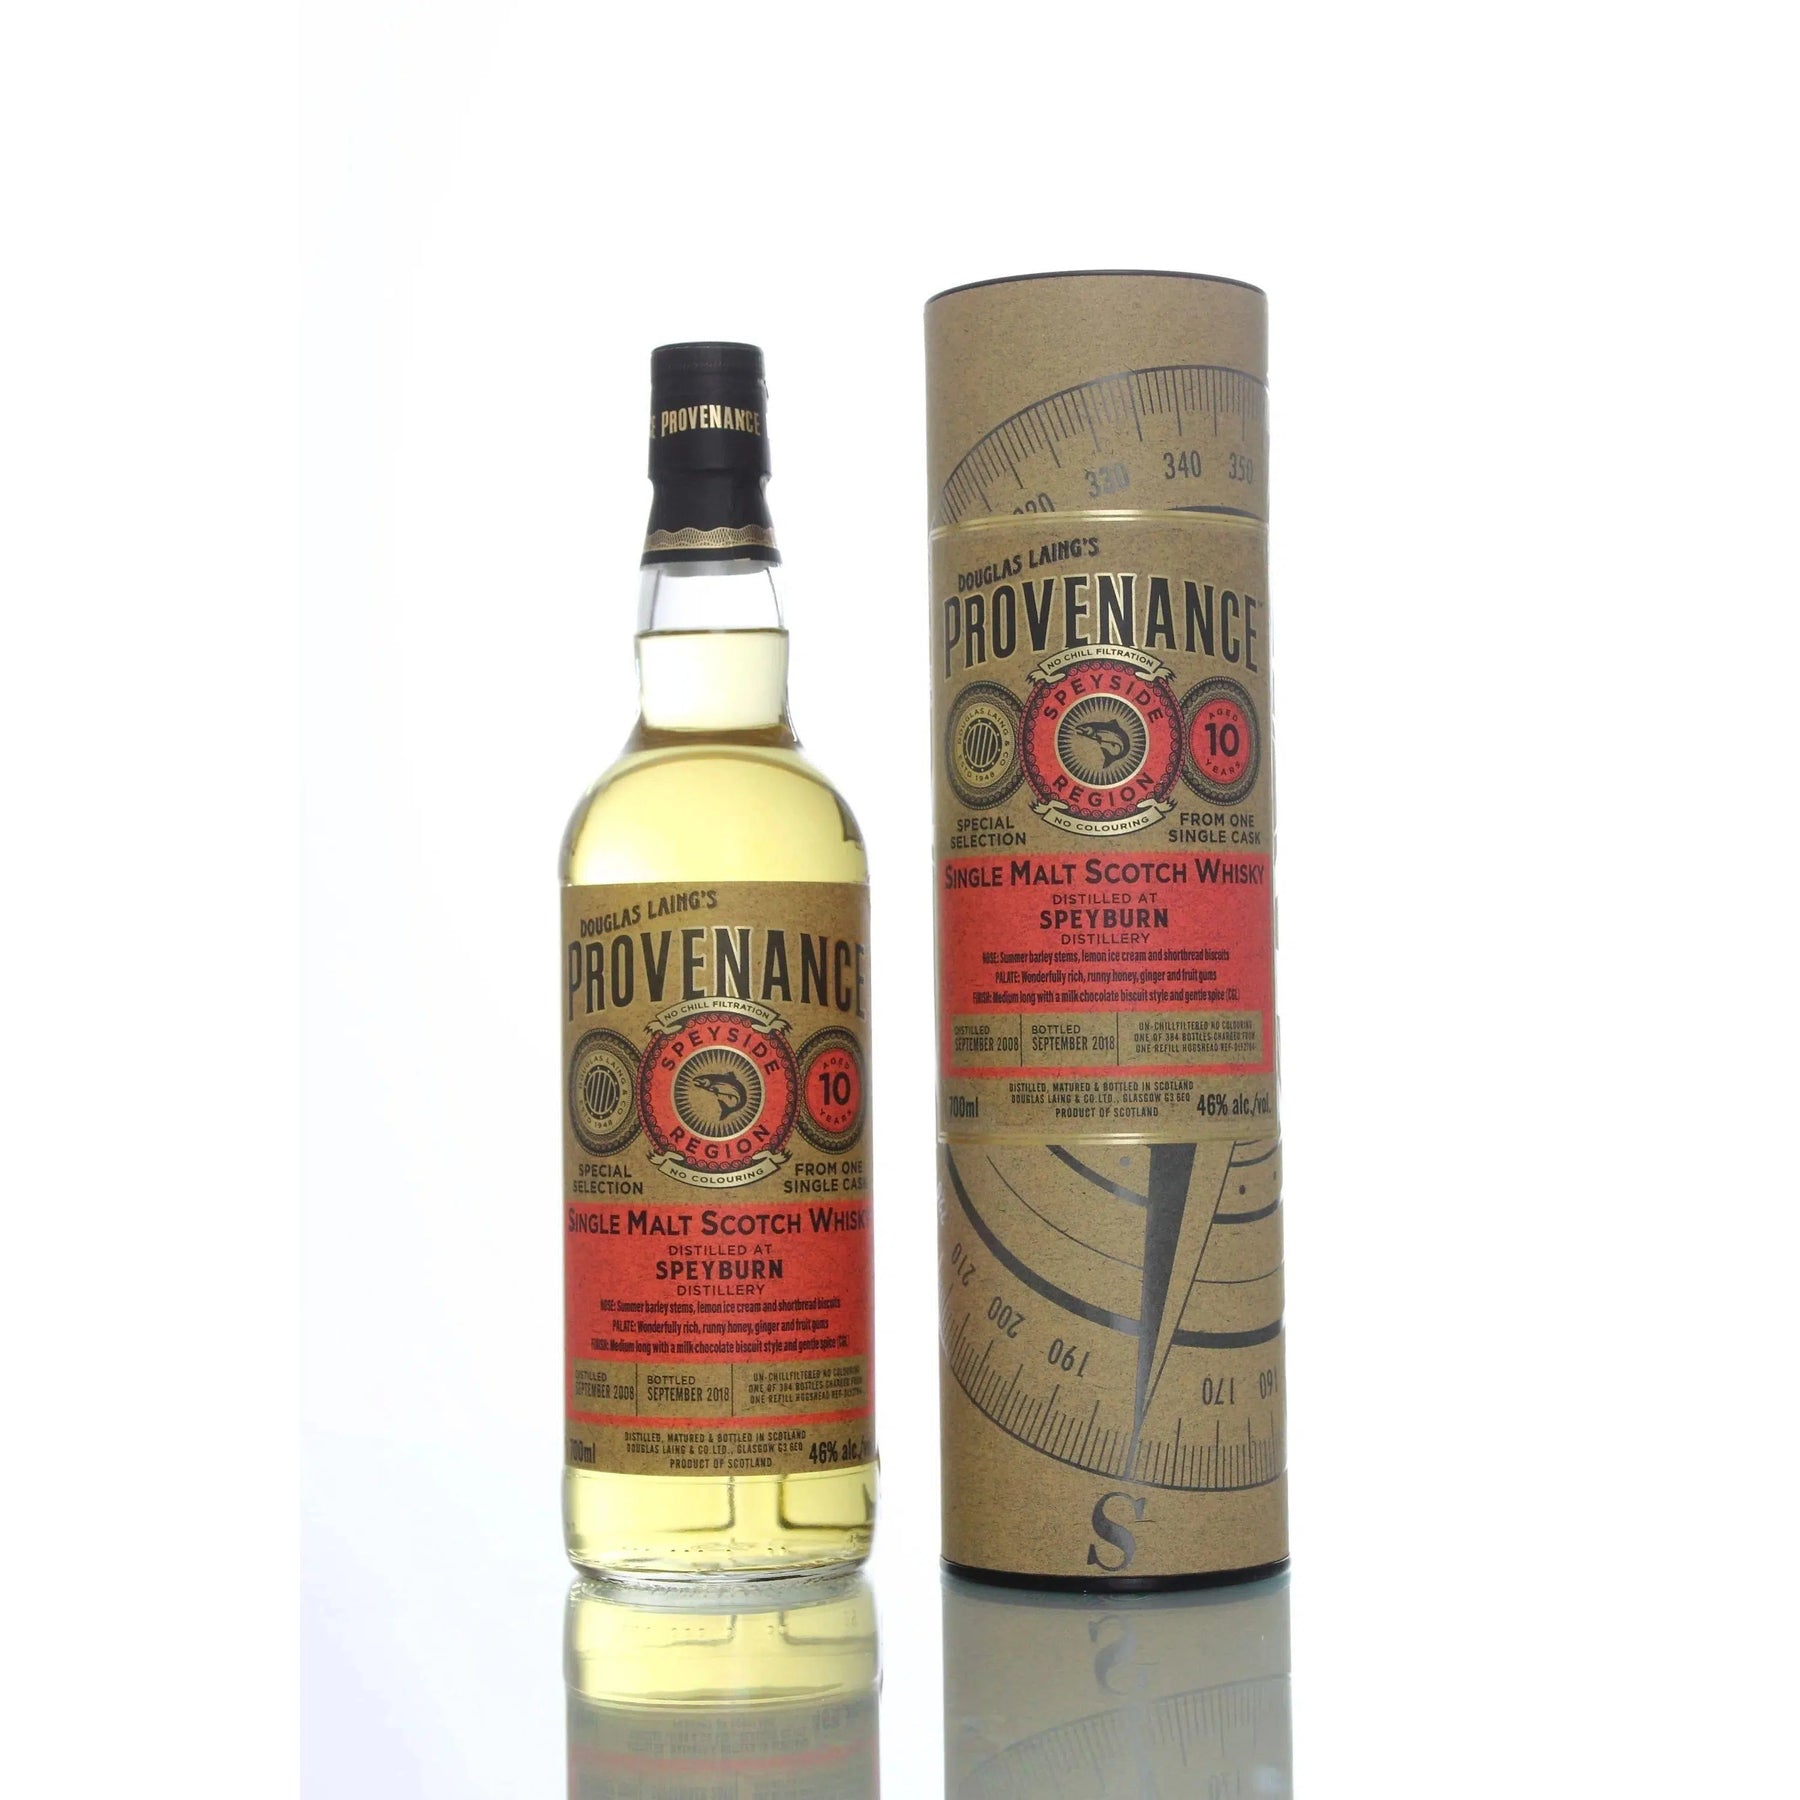 Provenance (Speyburn) 10 Years Old Douglas Laing Scotch Whisky